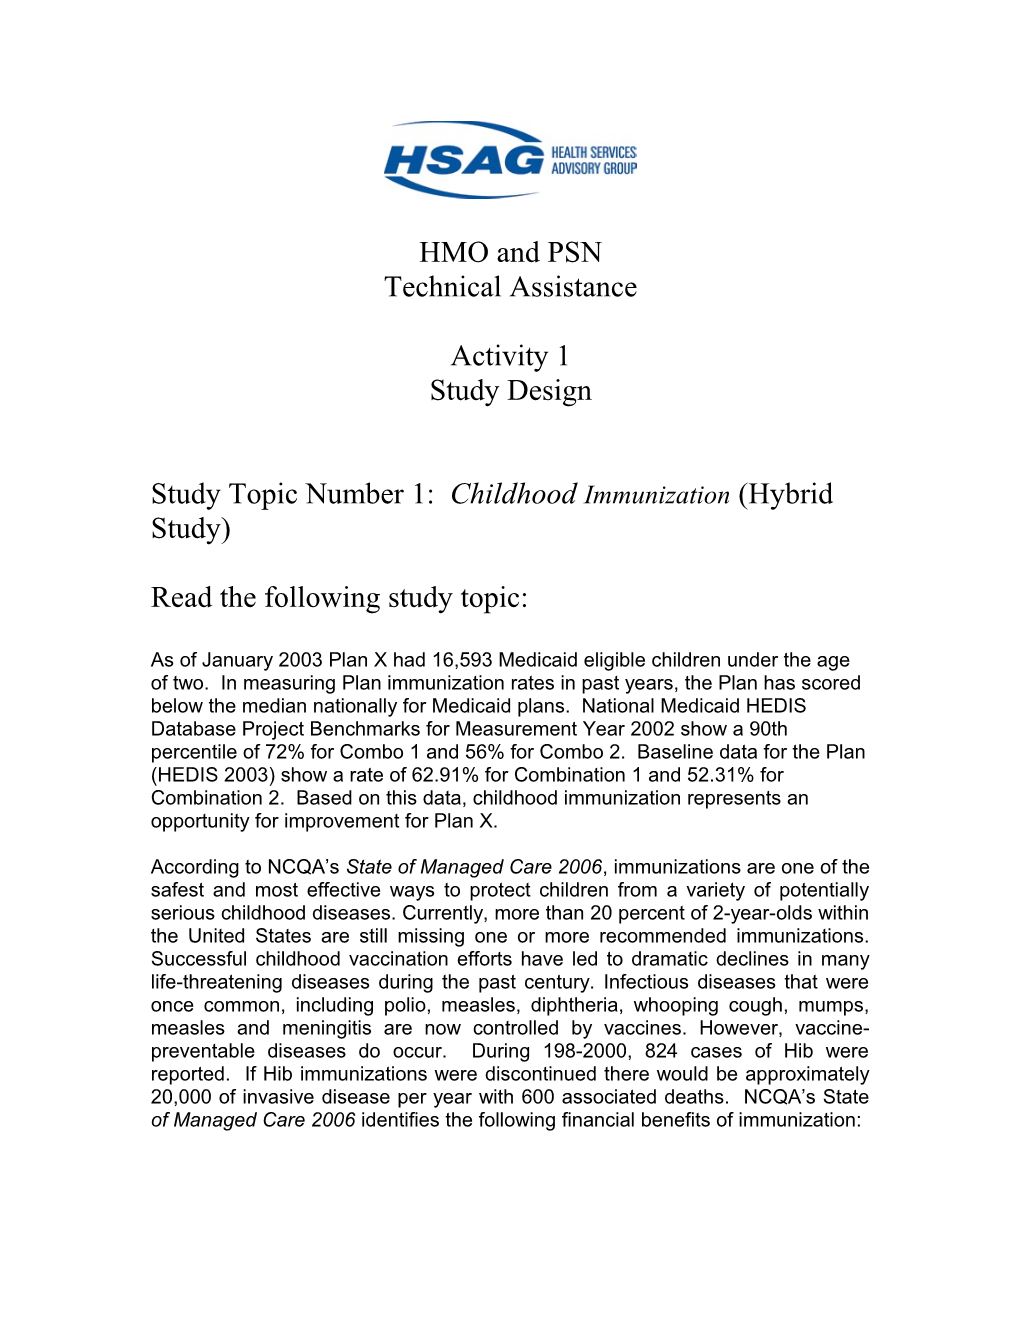 Study Topic Number 1: Childhood Immunization (Hybrid Study)